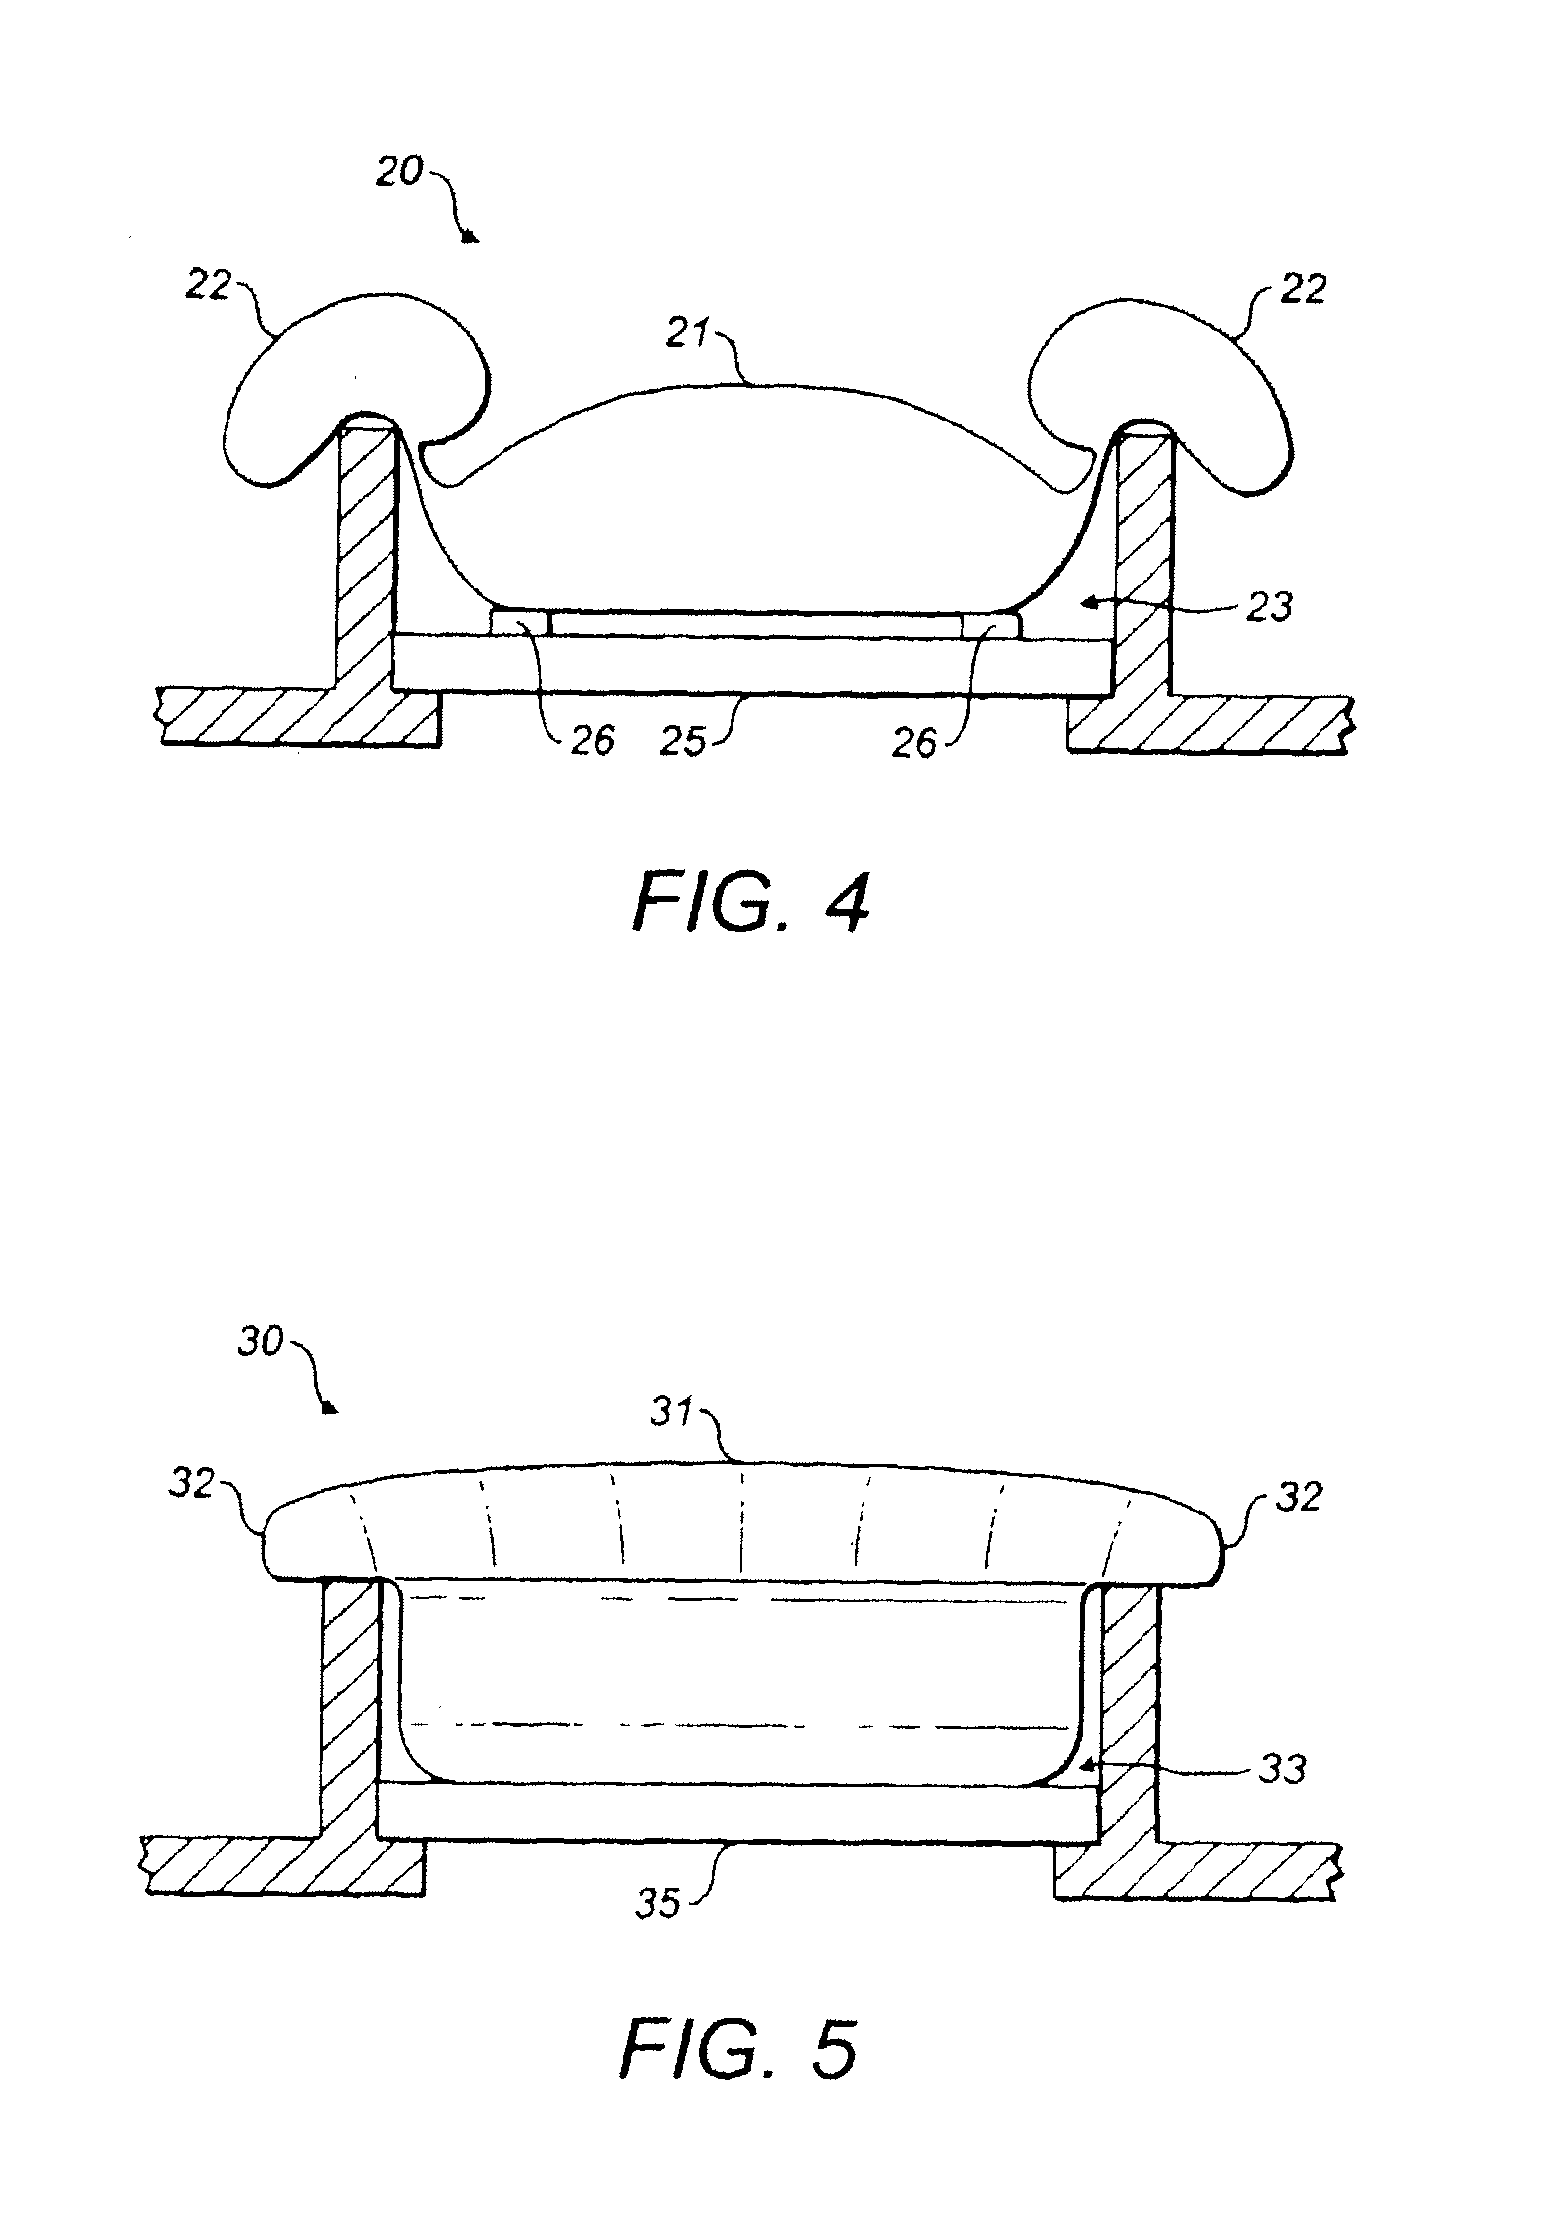 Insulation device